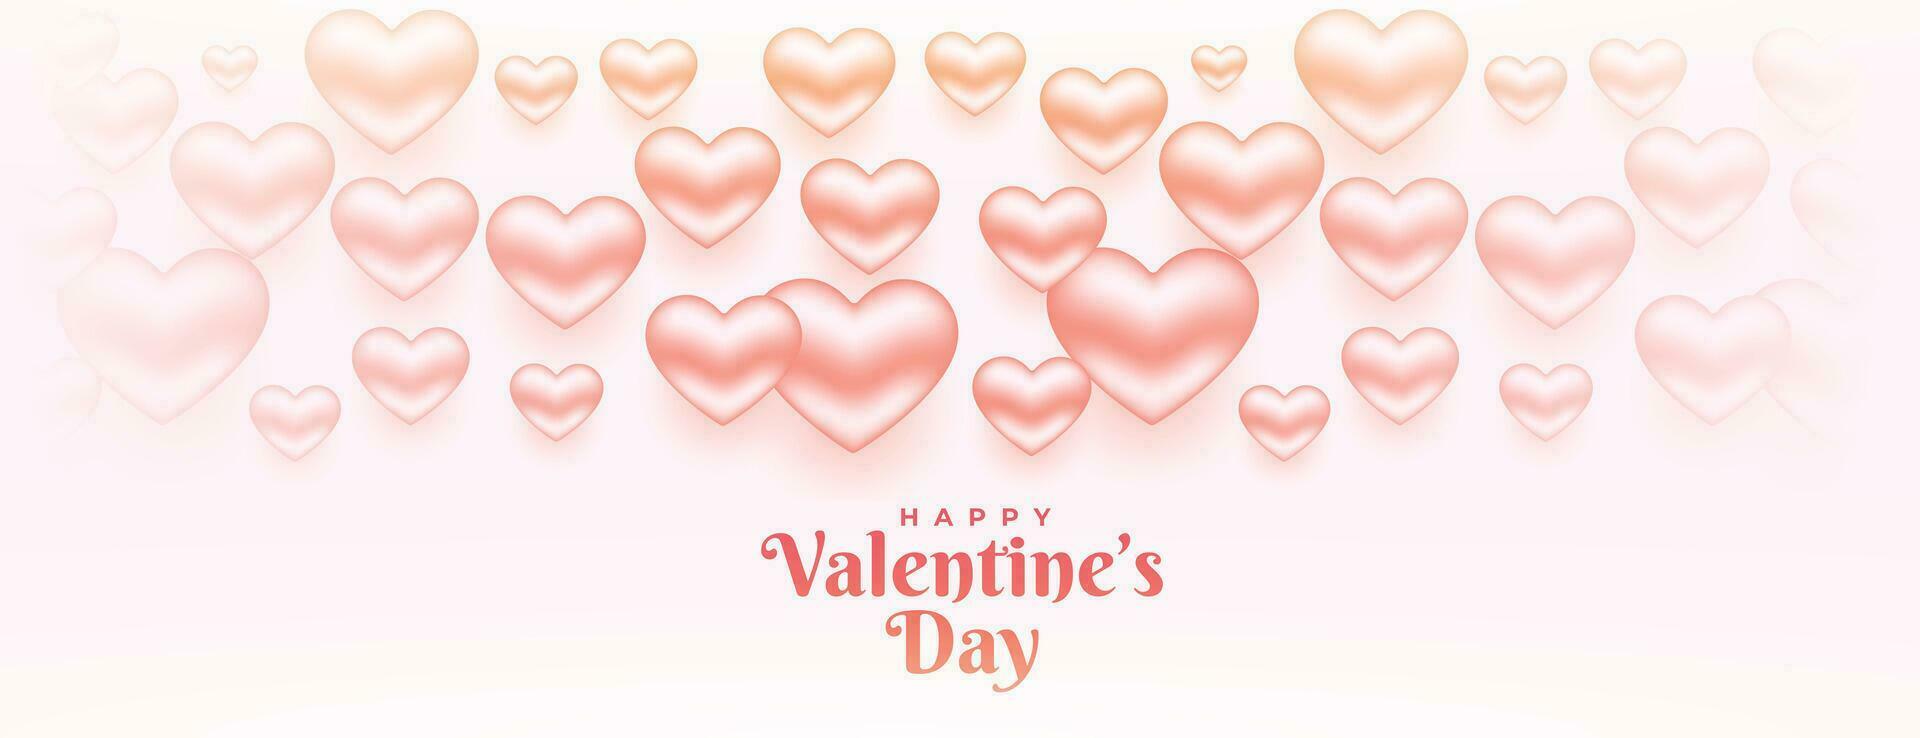 happy valentines day 3d hearts banner design vector